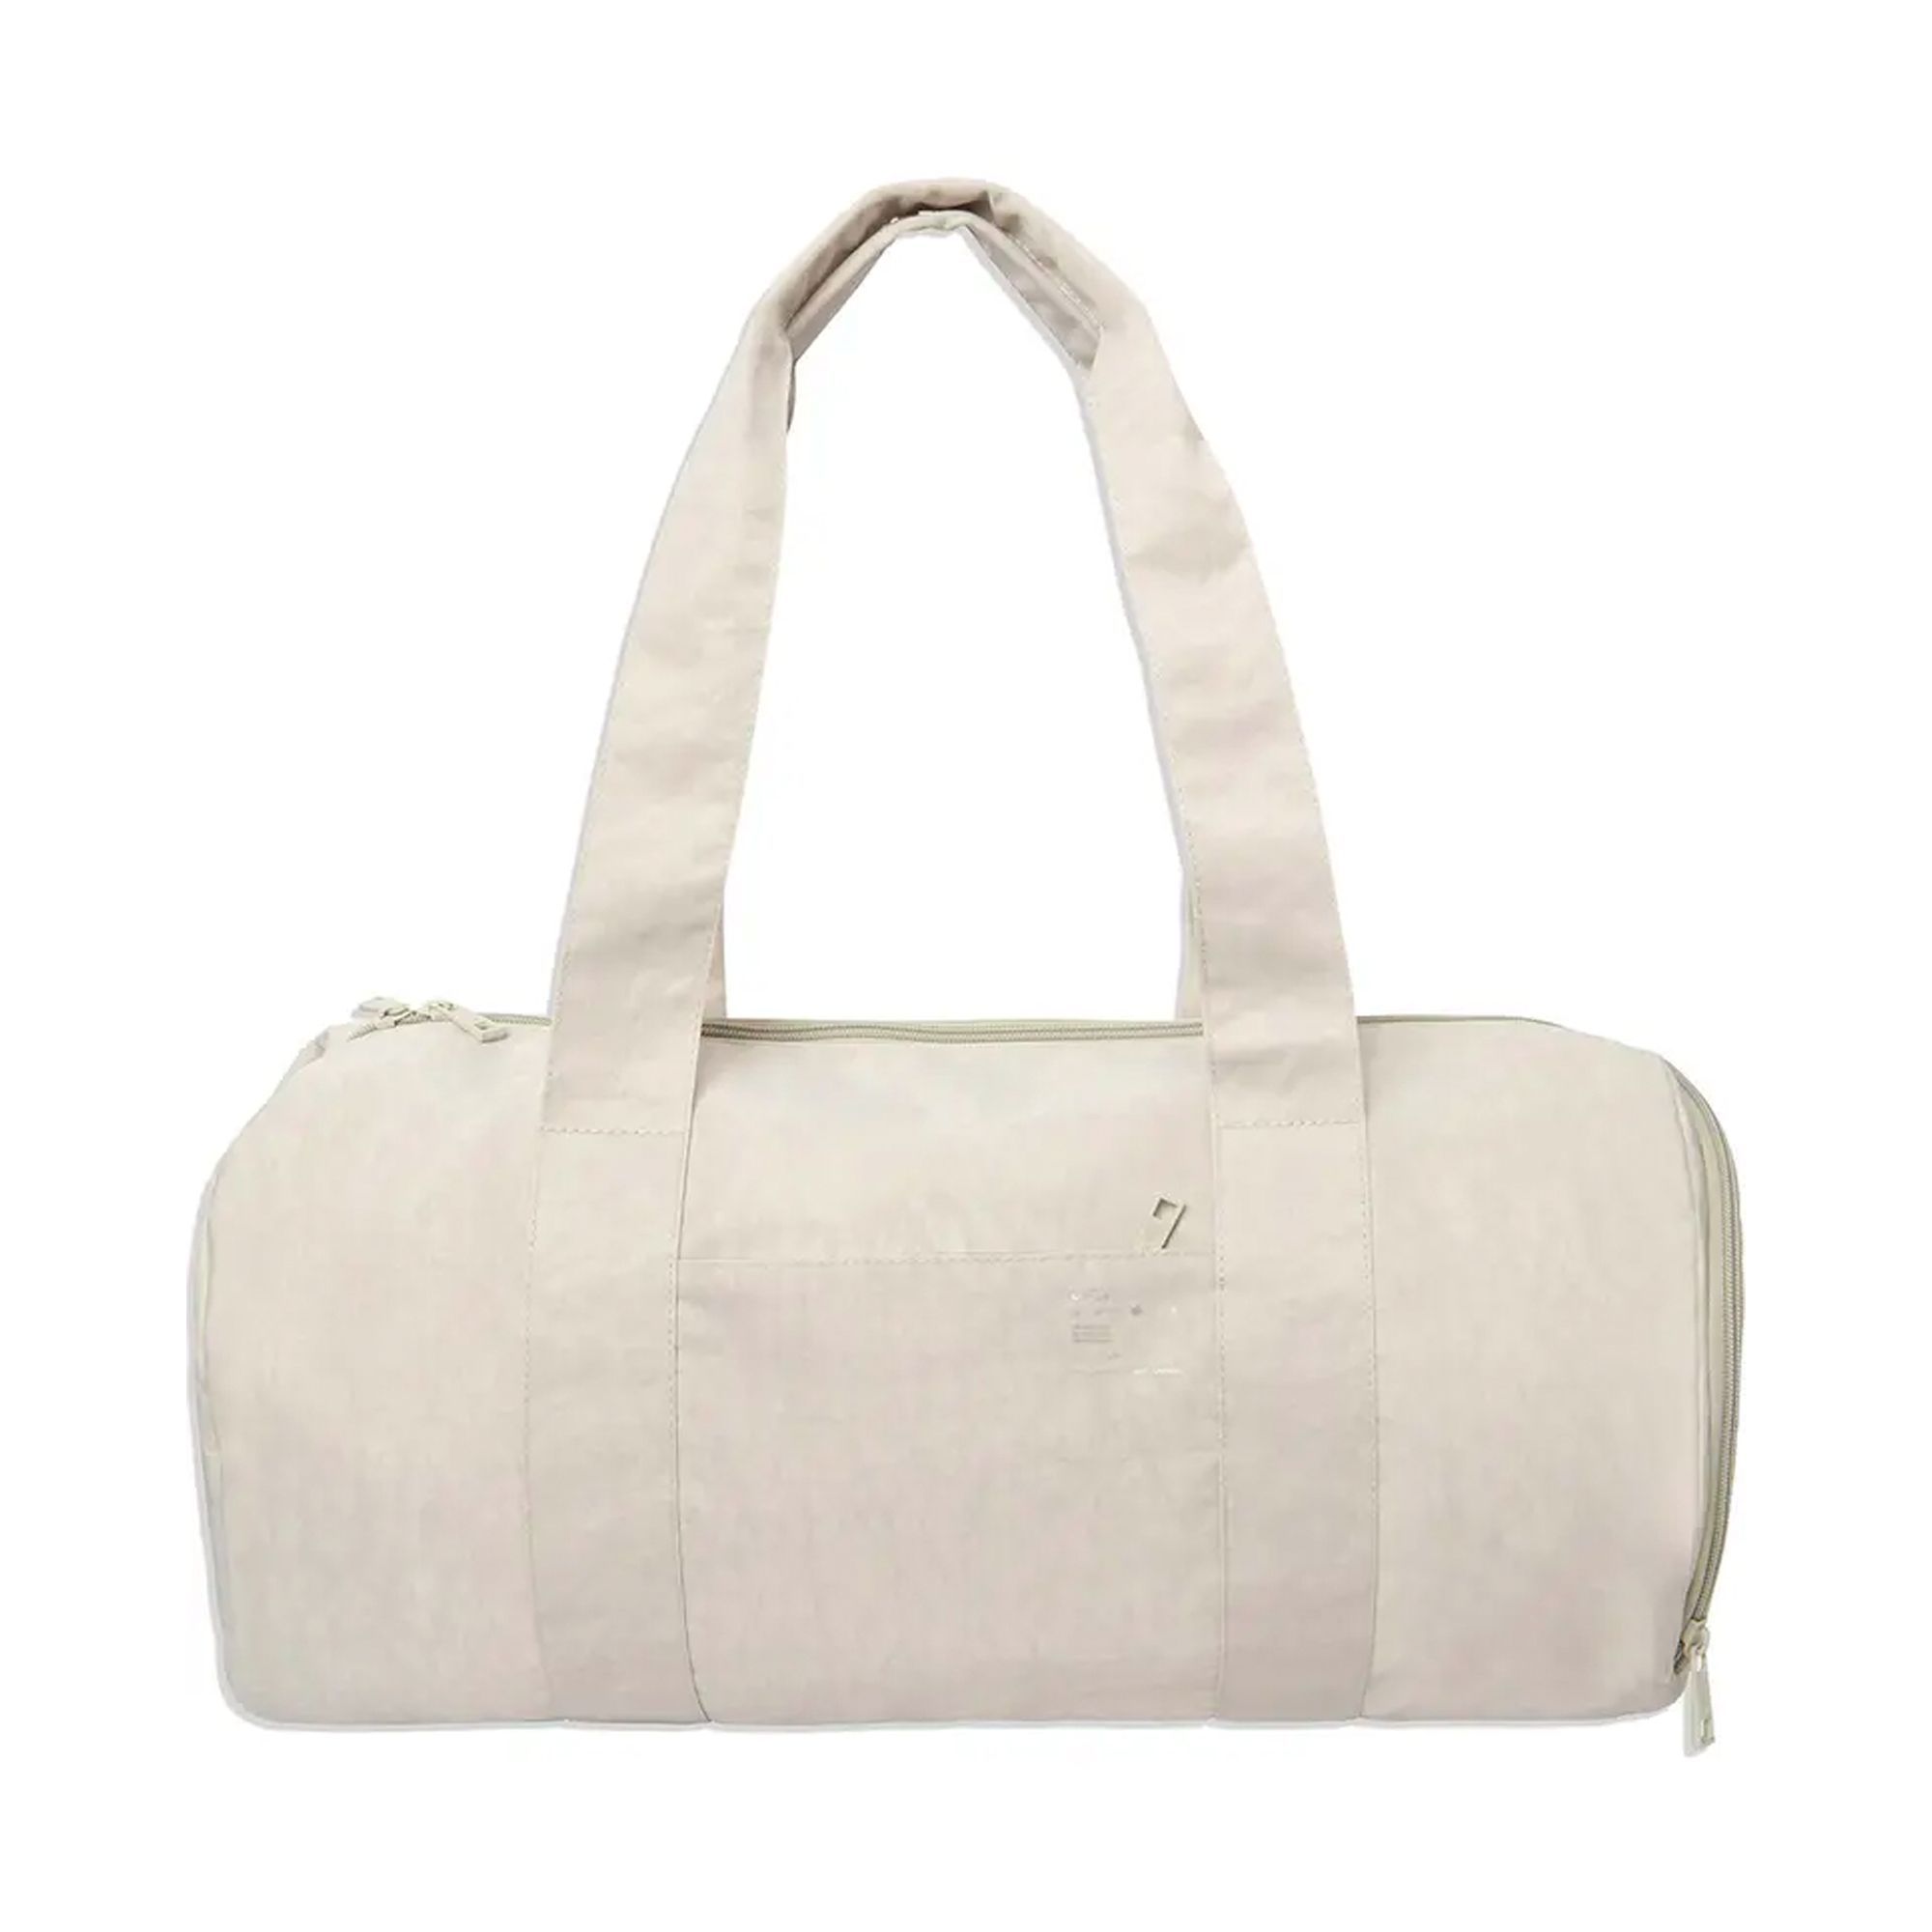 Tassen & portemonnees Bagage & Reizen Weekendtassen Waterproof travel bag Summer Bag Cute Large Bag for Women Beautiful Overnight Bag 